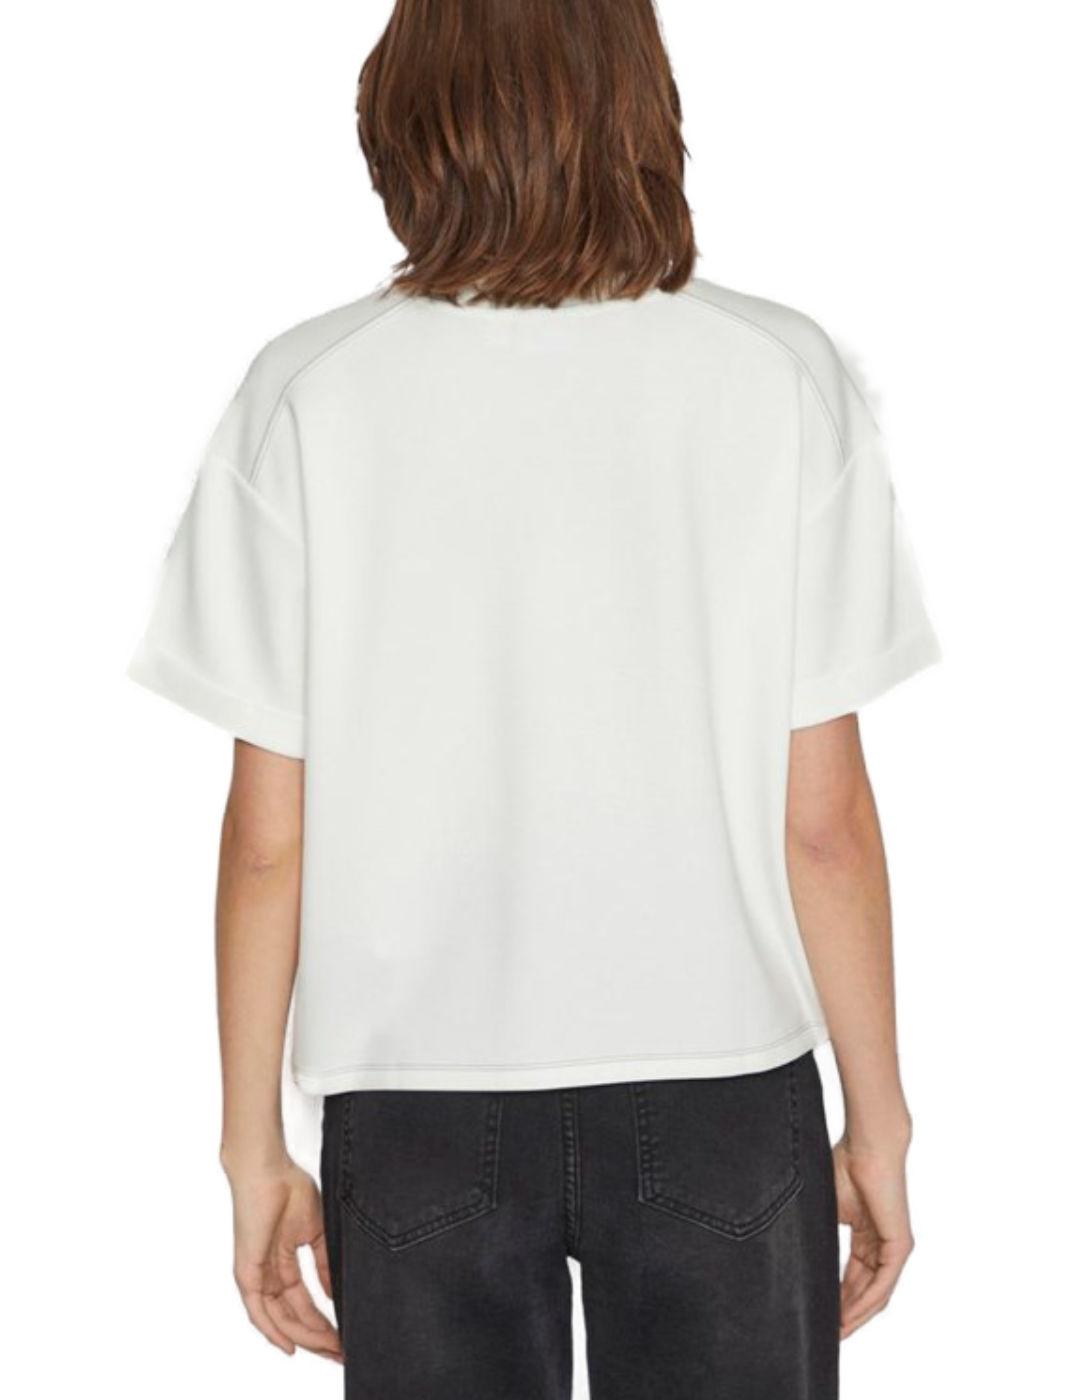 Camiseta Vila Karena blanco manga corta para mujer